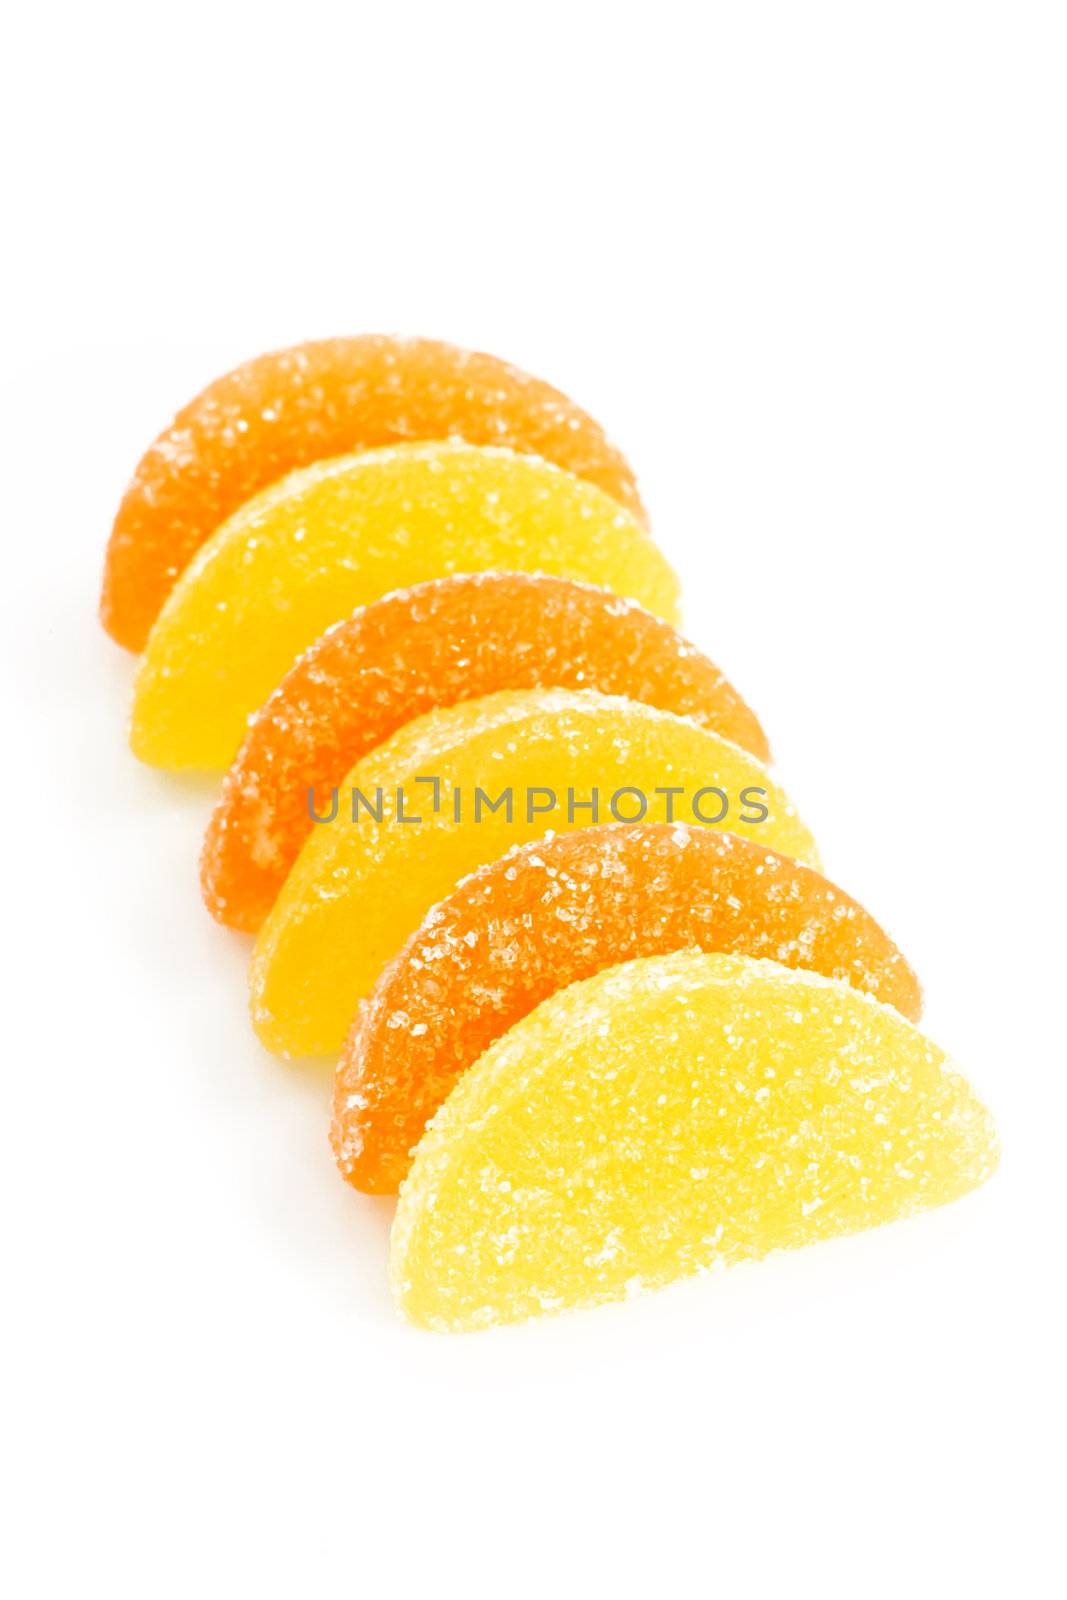 Orange and yellow wine gum on bright background